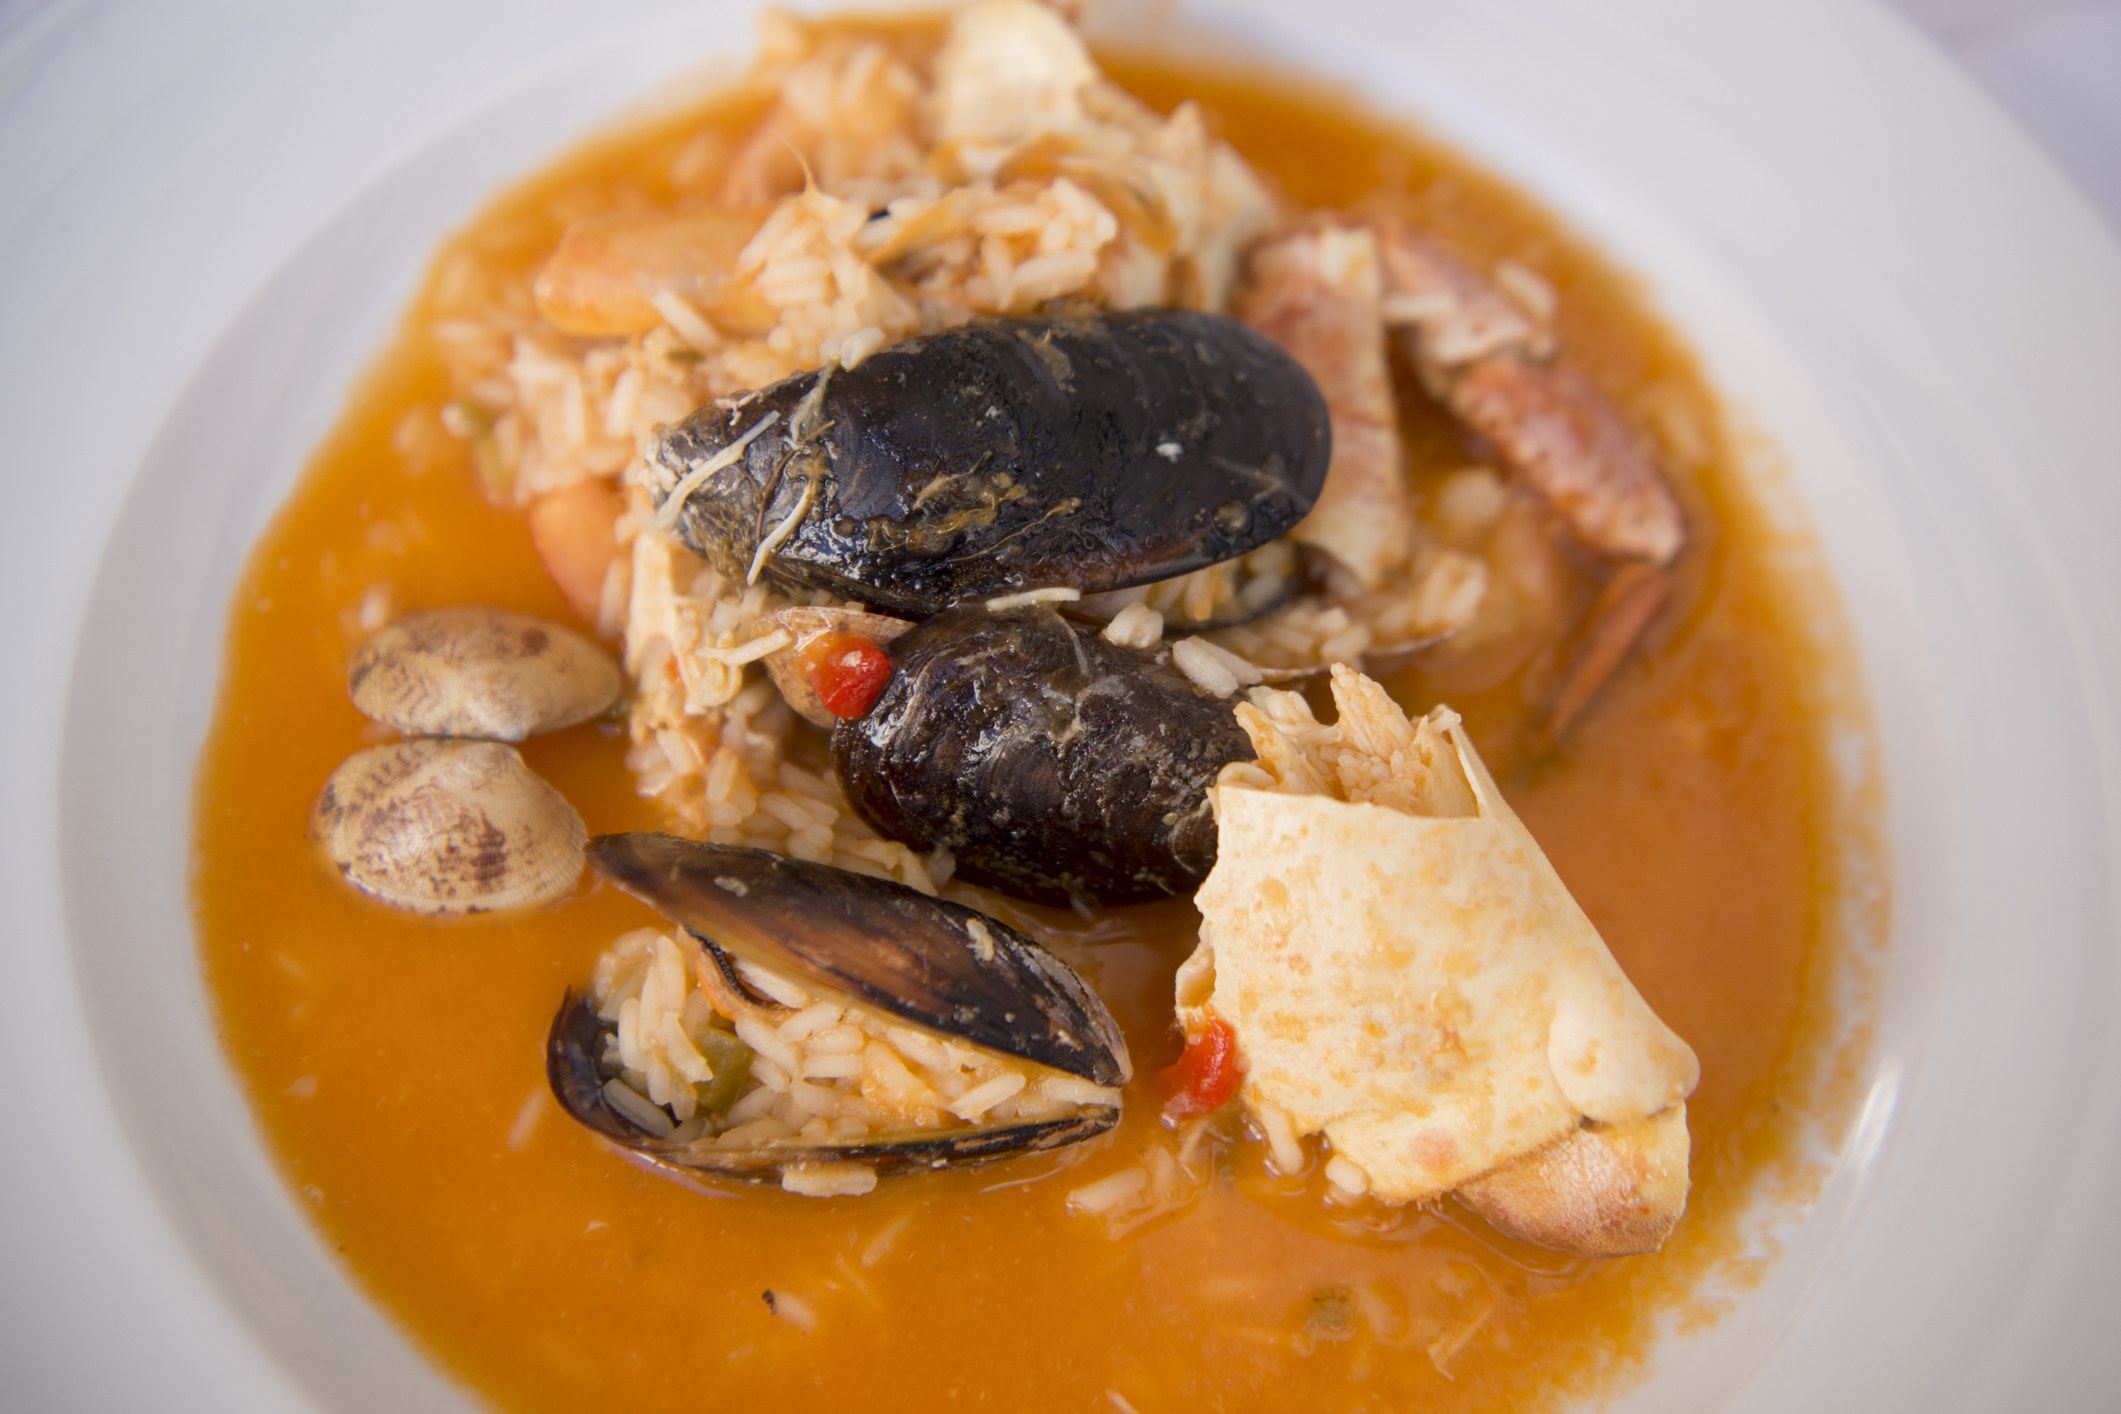 Portuguese seafood rice in a tomato sauce